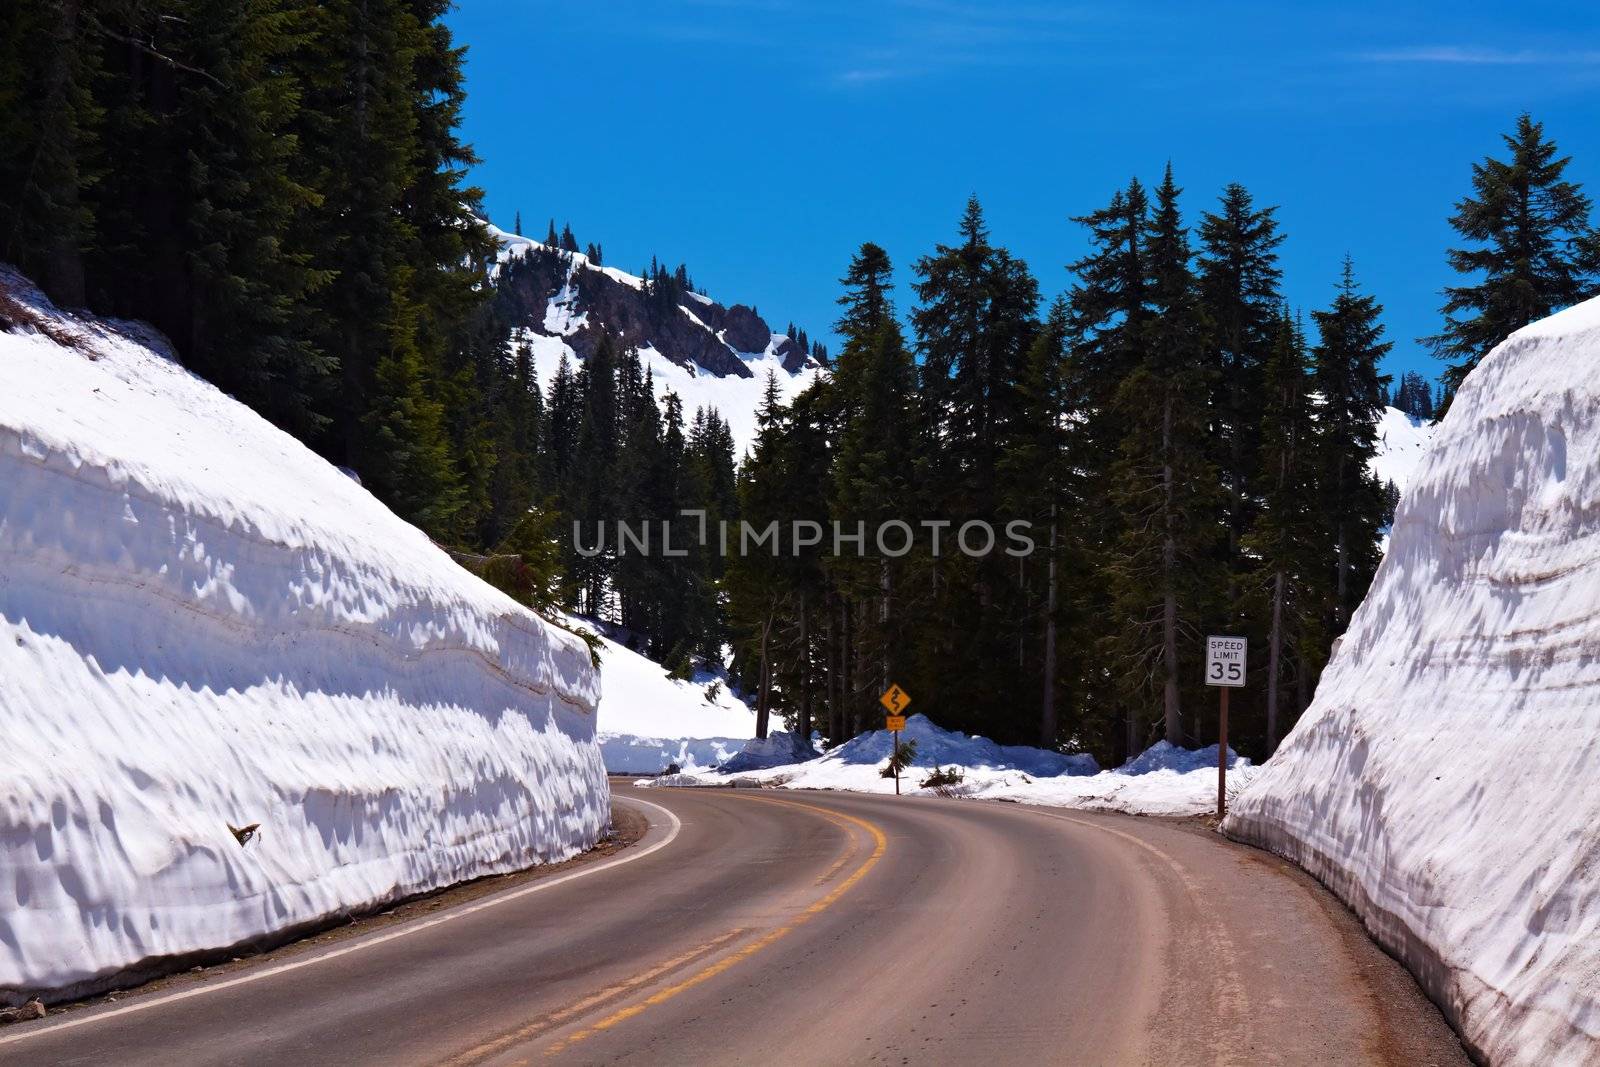 Winter Winding Road, Chinook Pass, Washington, USA